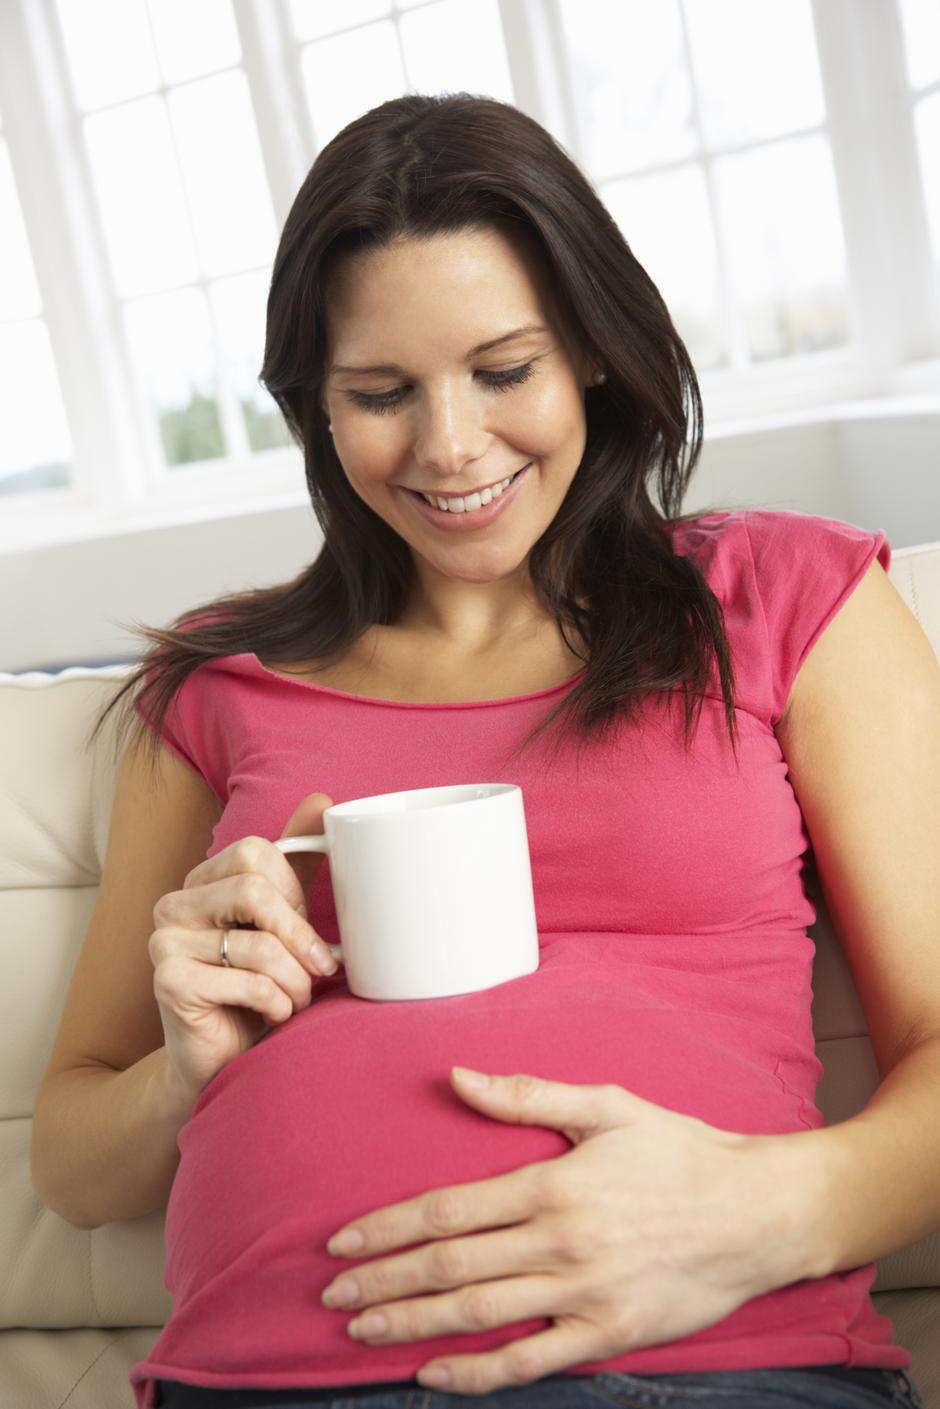 trudnica čaj kava | Author: Thinkstock